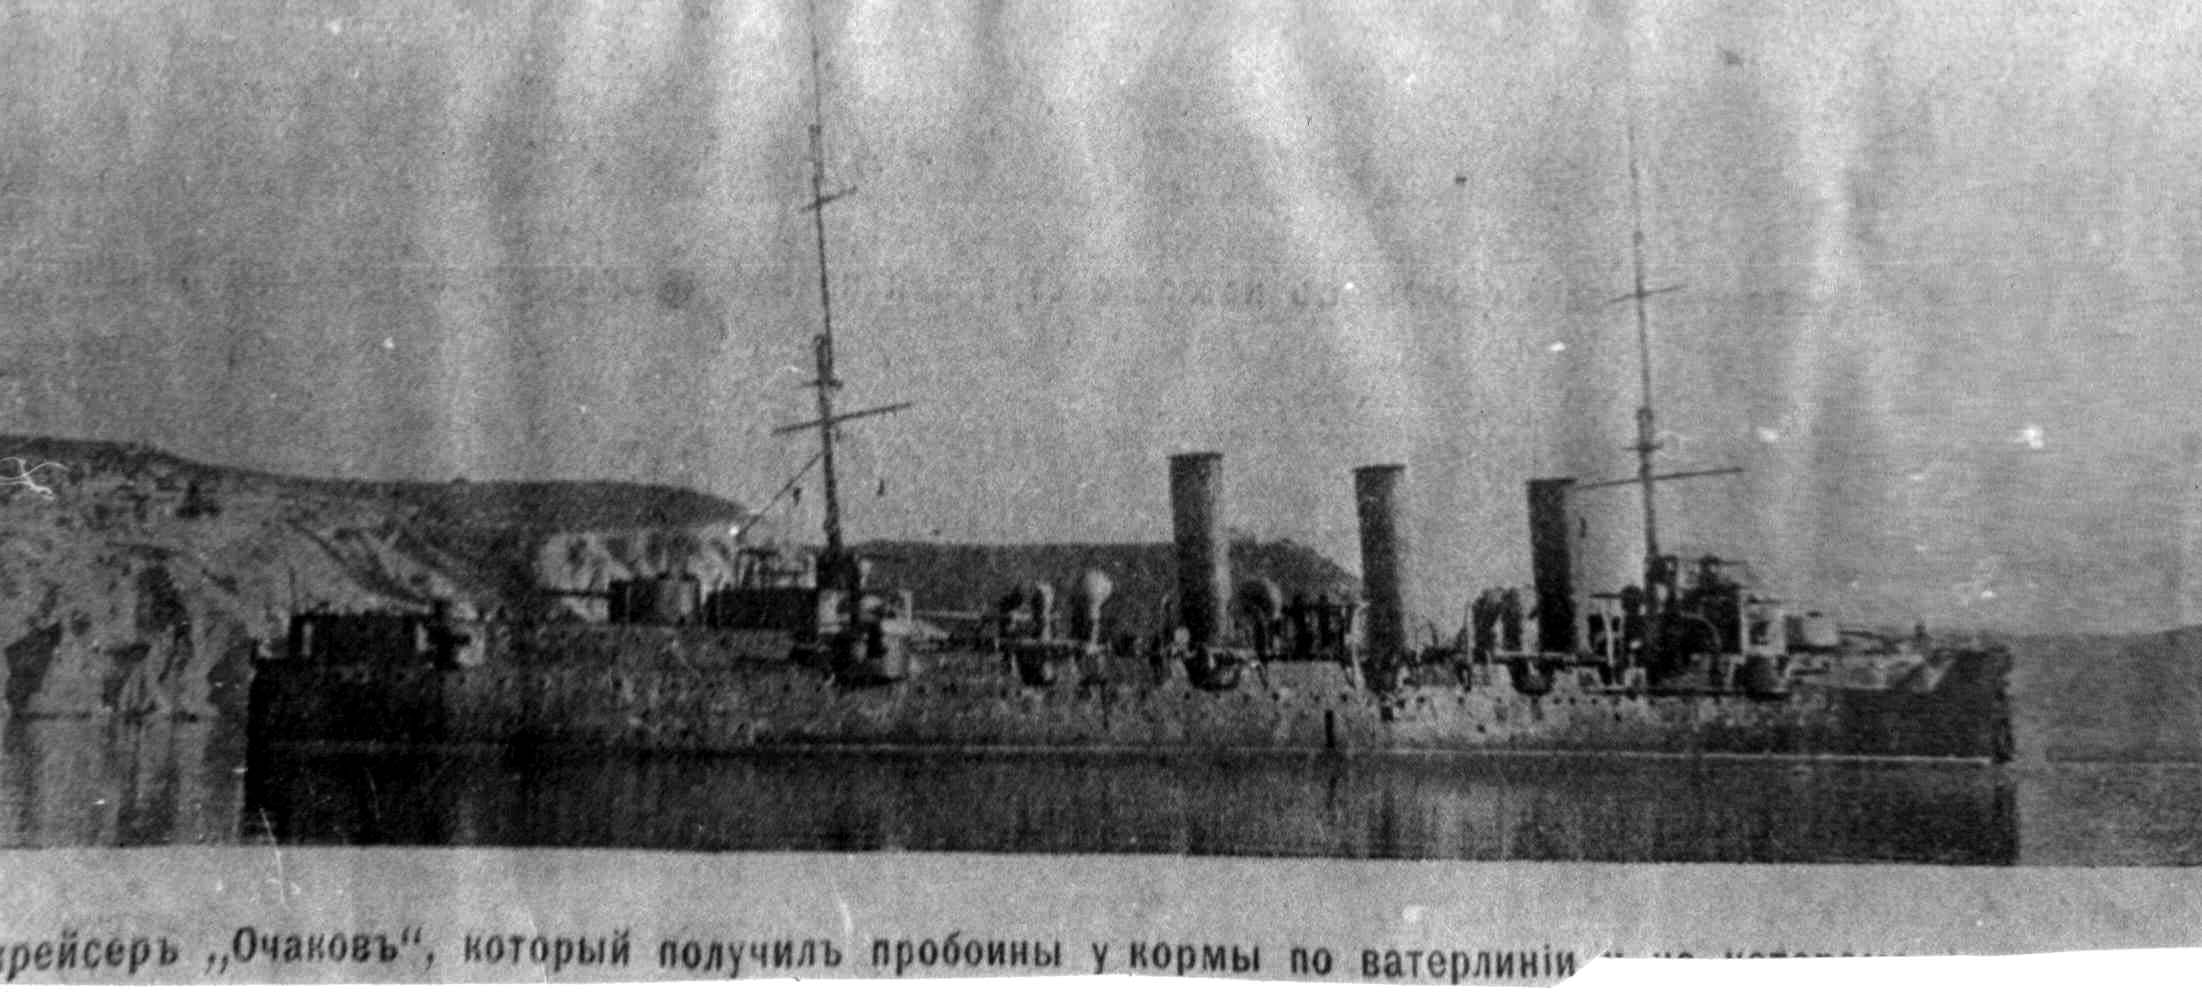 Ochakov, damaged by goverment ships in Sevastopol.jpg